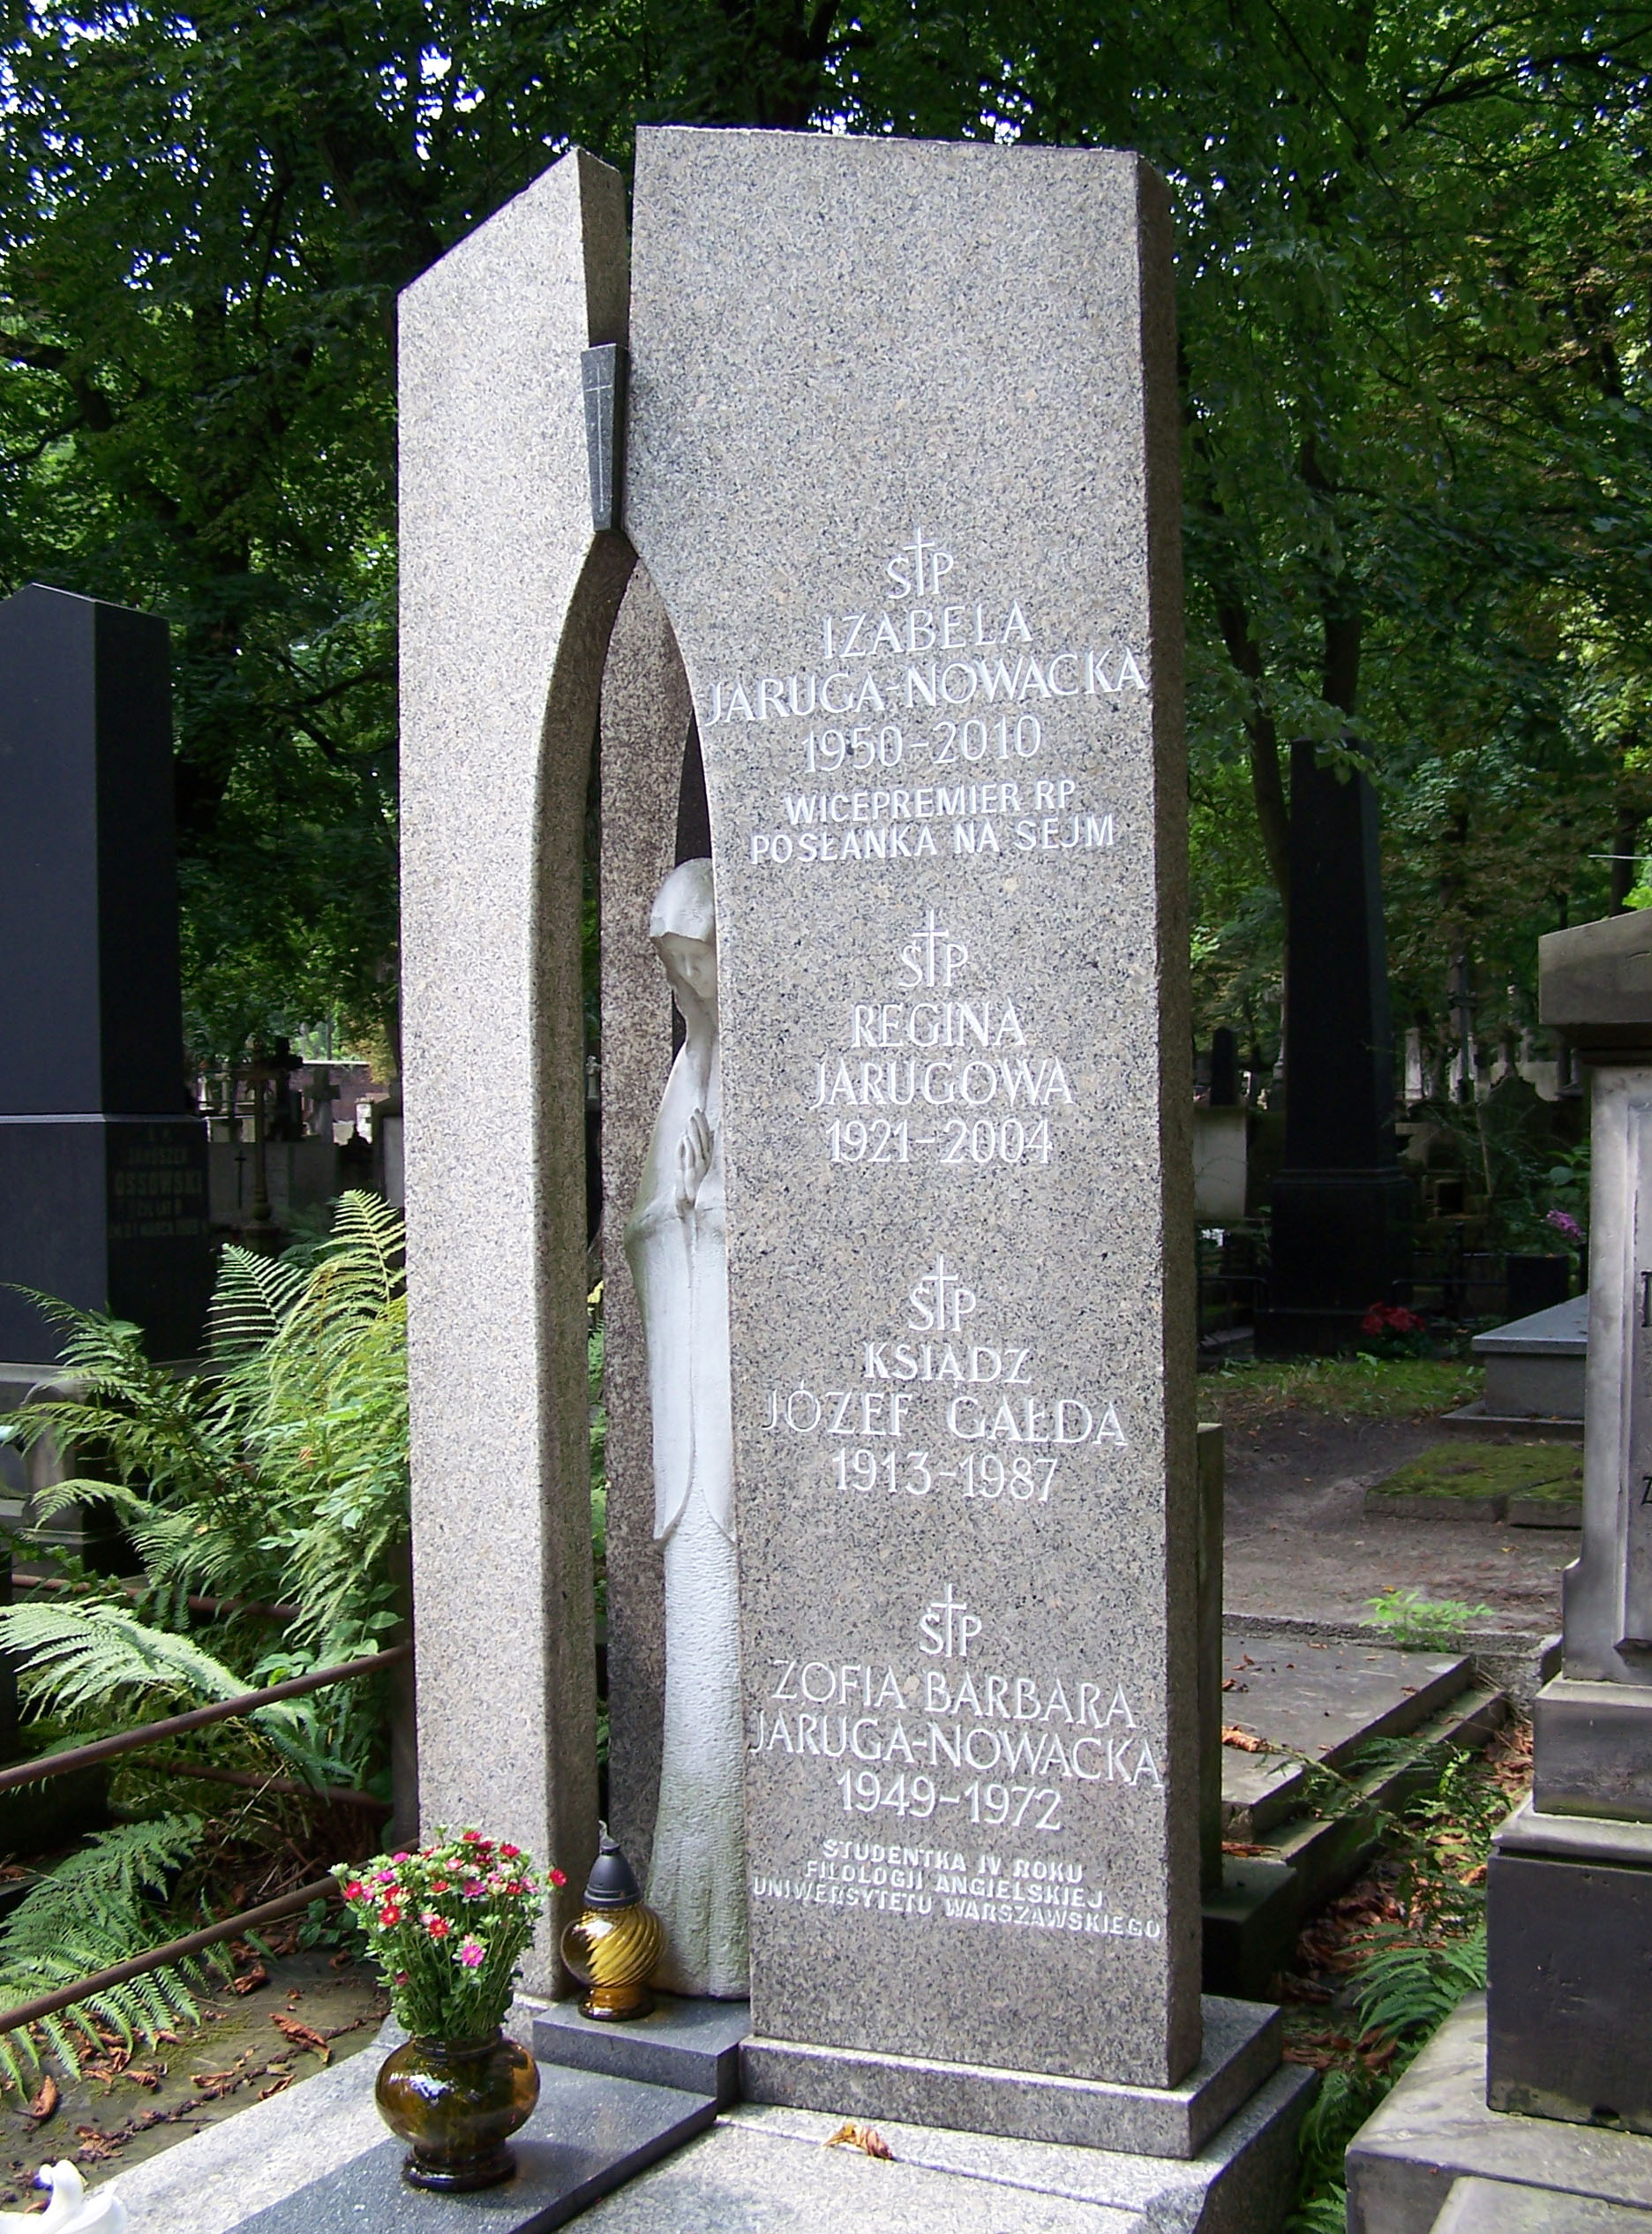 Wikipedia, Izabela Jaruga-Nowacka, Powzki Cemetery - J, Self-published work